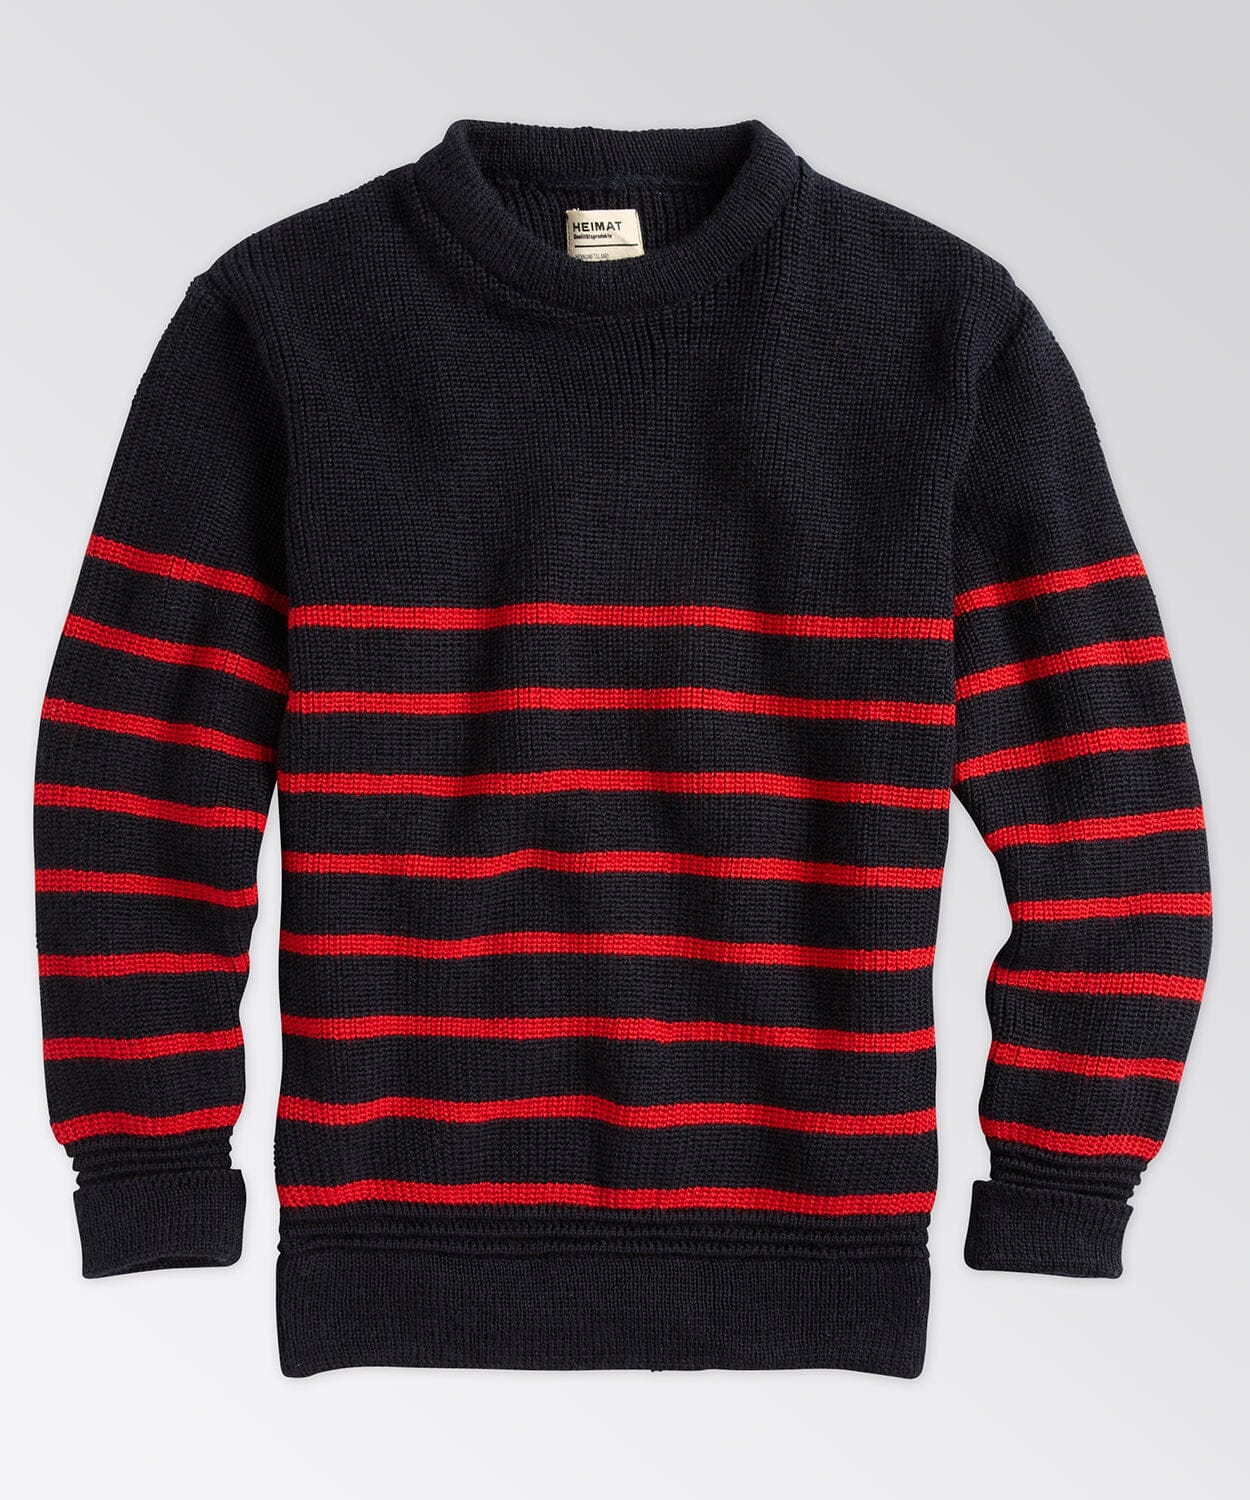 Crewneck sweater with stripes